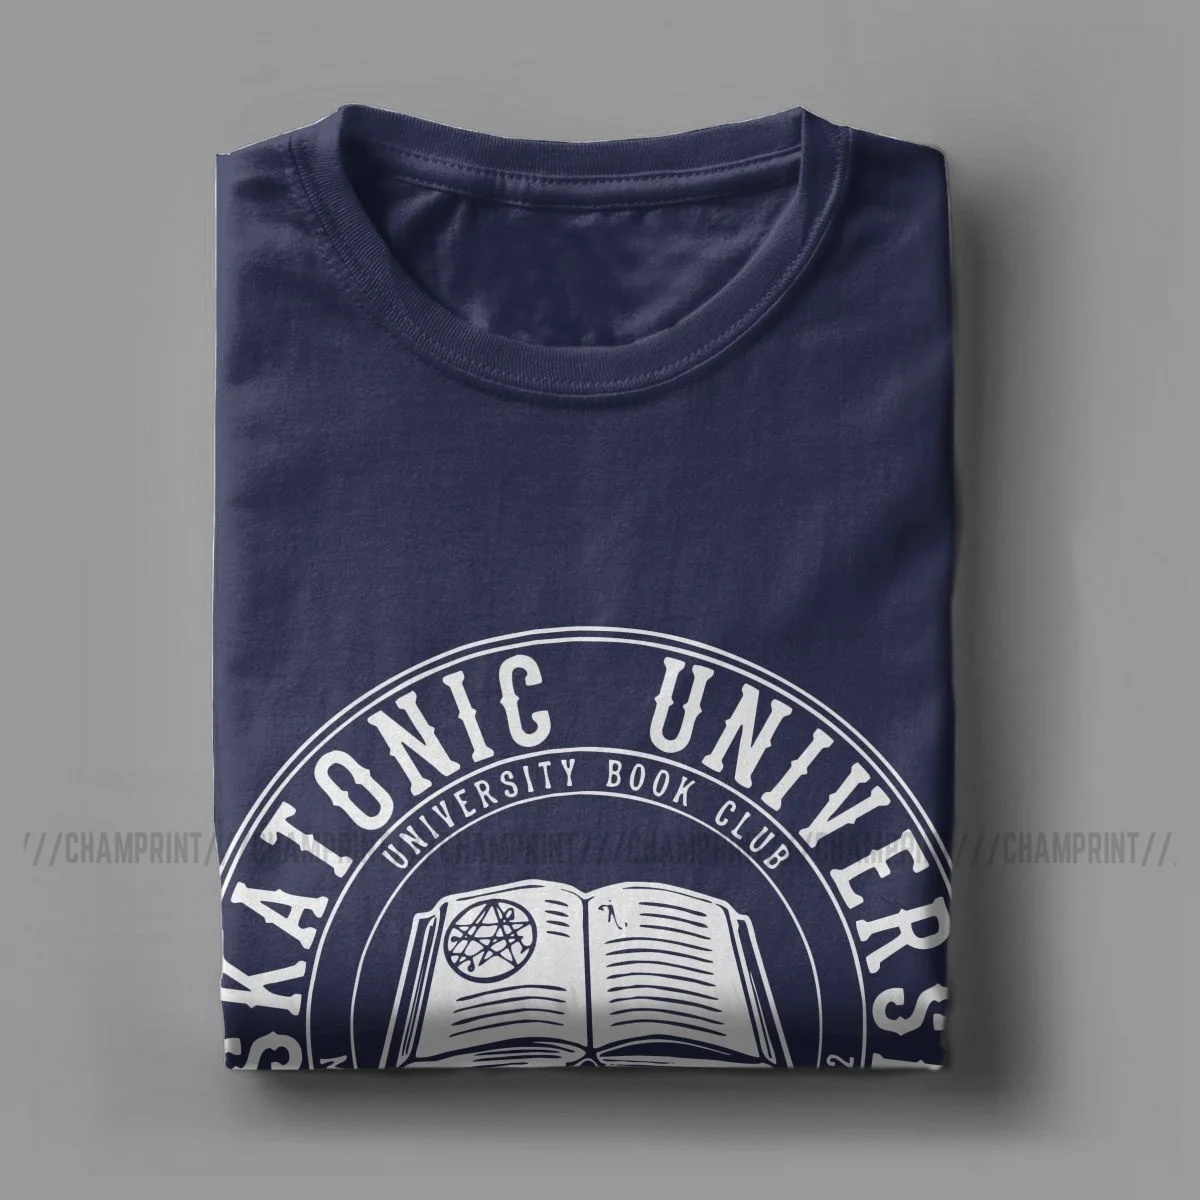 Men's T-Shirt Miskatonic University Book Club Awesome Cotton Tees Short Sleeve Cthulhu Lovecraft T Shirt O Neck Clothing Adult